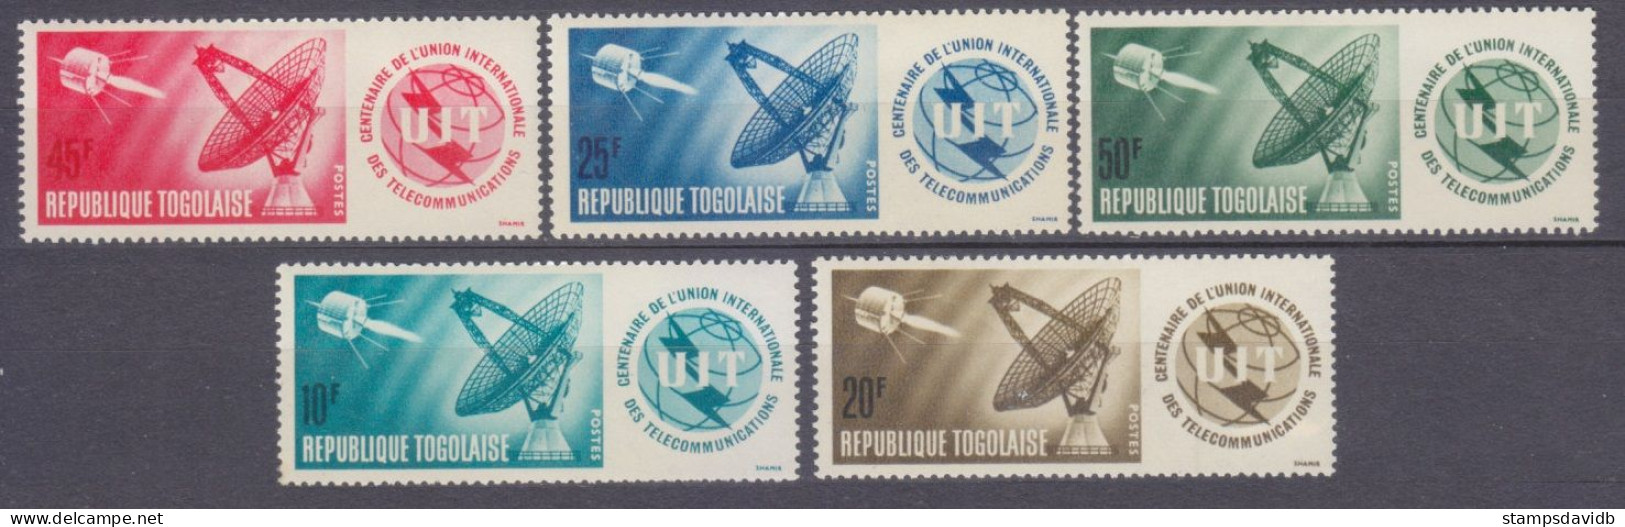 1965 Togo 457-461 100 Years Of ITU - UPU (Wereldpostunie)